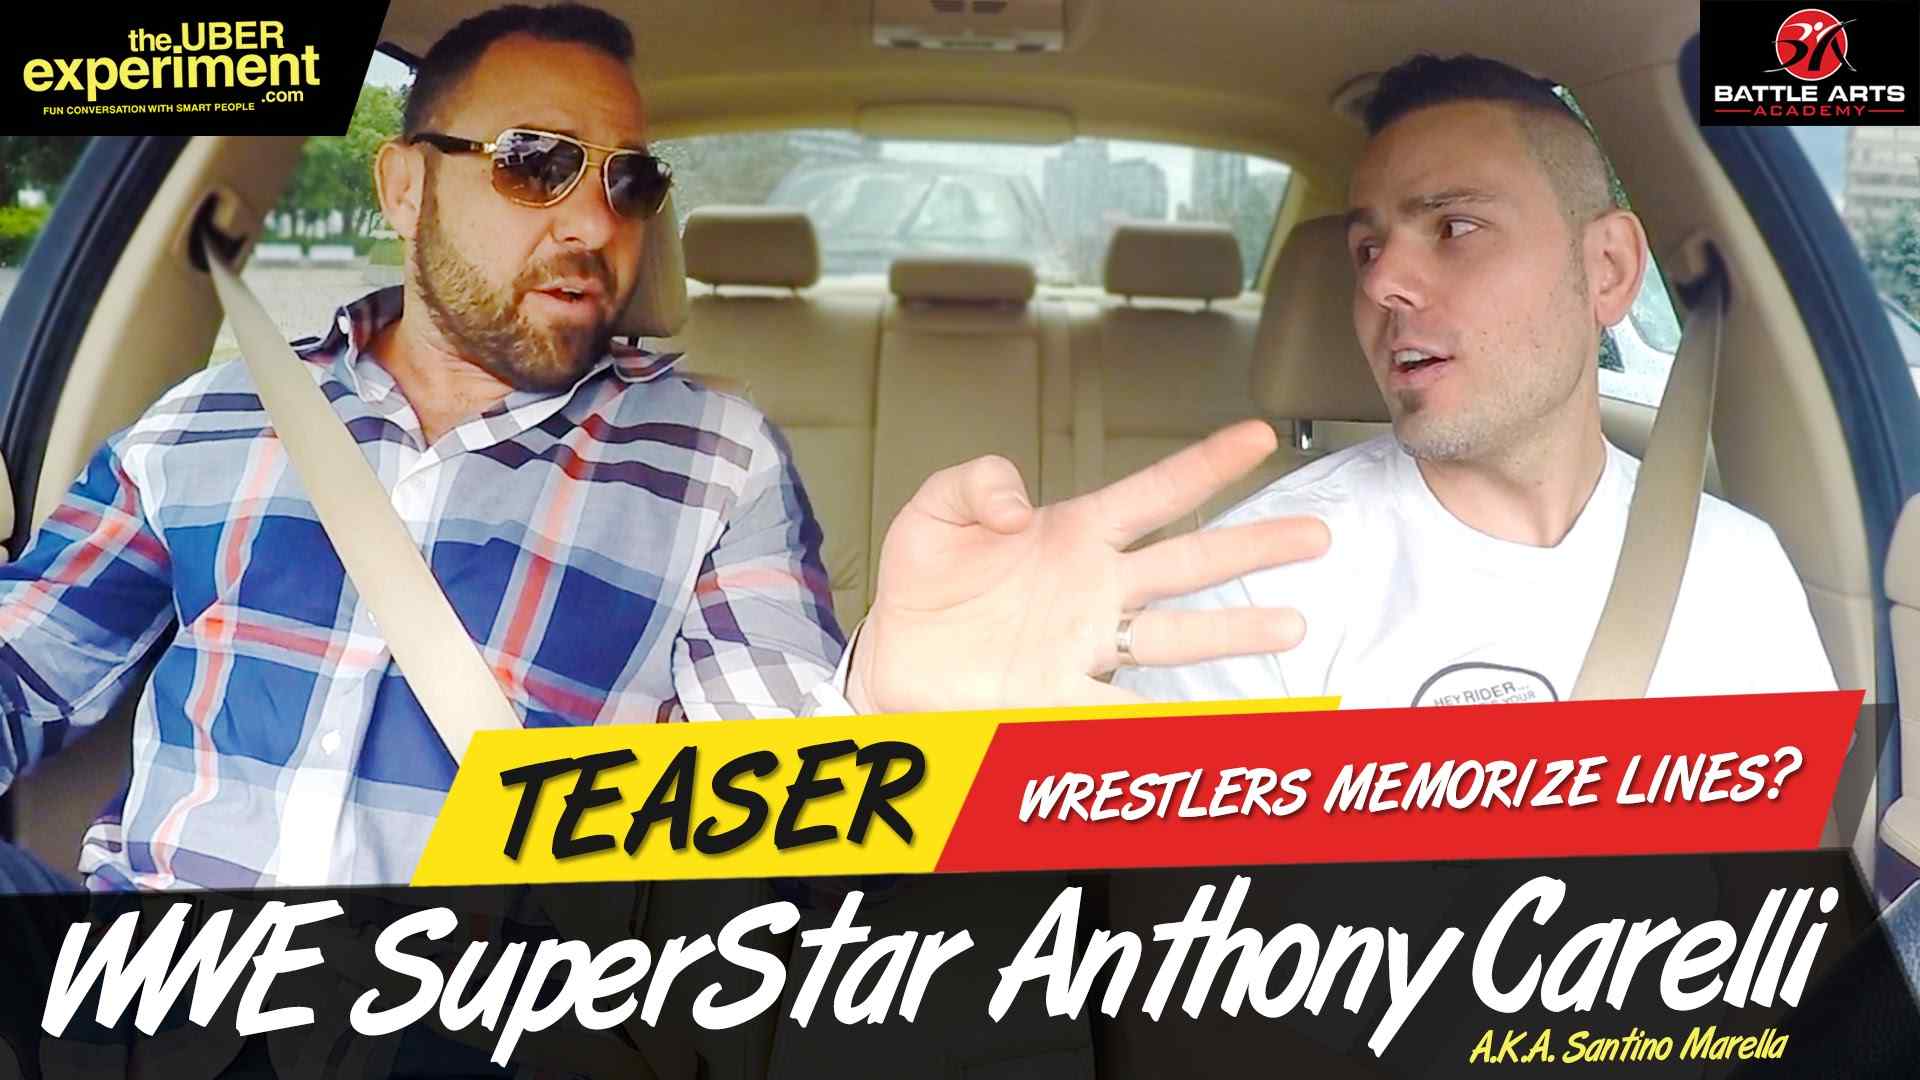 WRESTLERS MEMORIZE LINES? - WWE Superstar Wrestler Anthony Carelli (Santino Marella) Uber Experiment